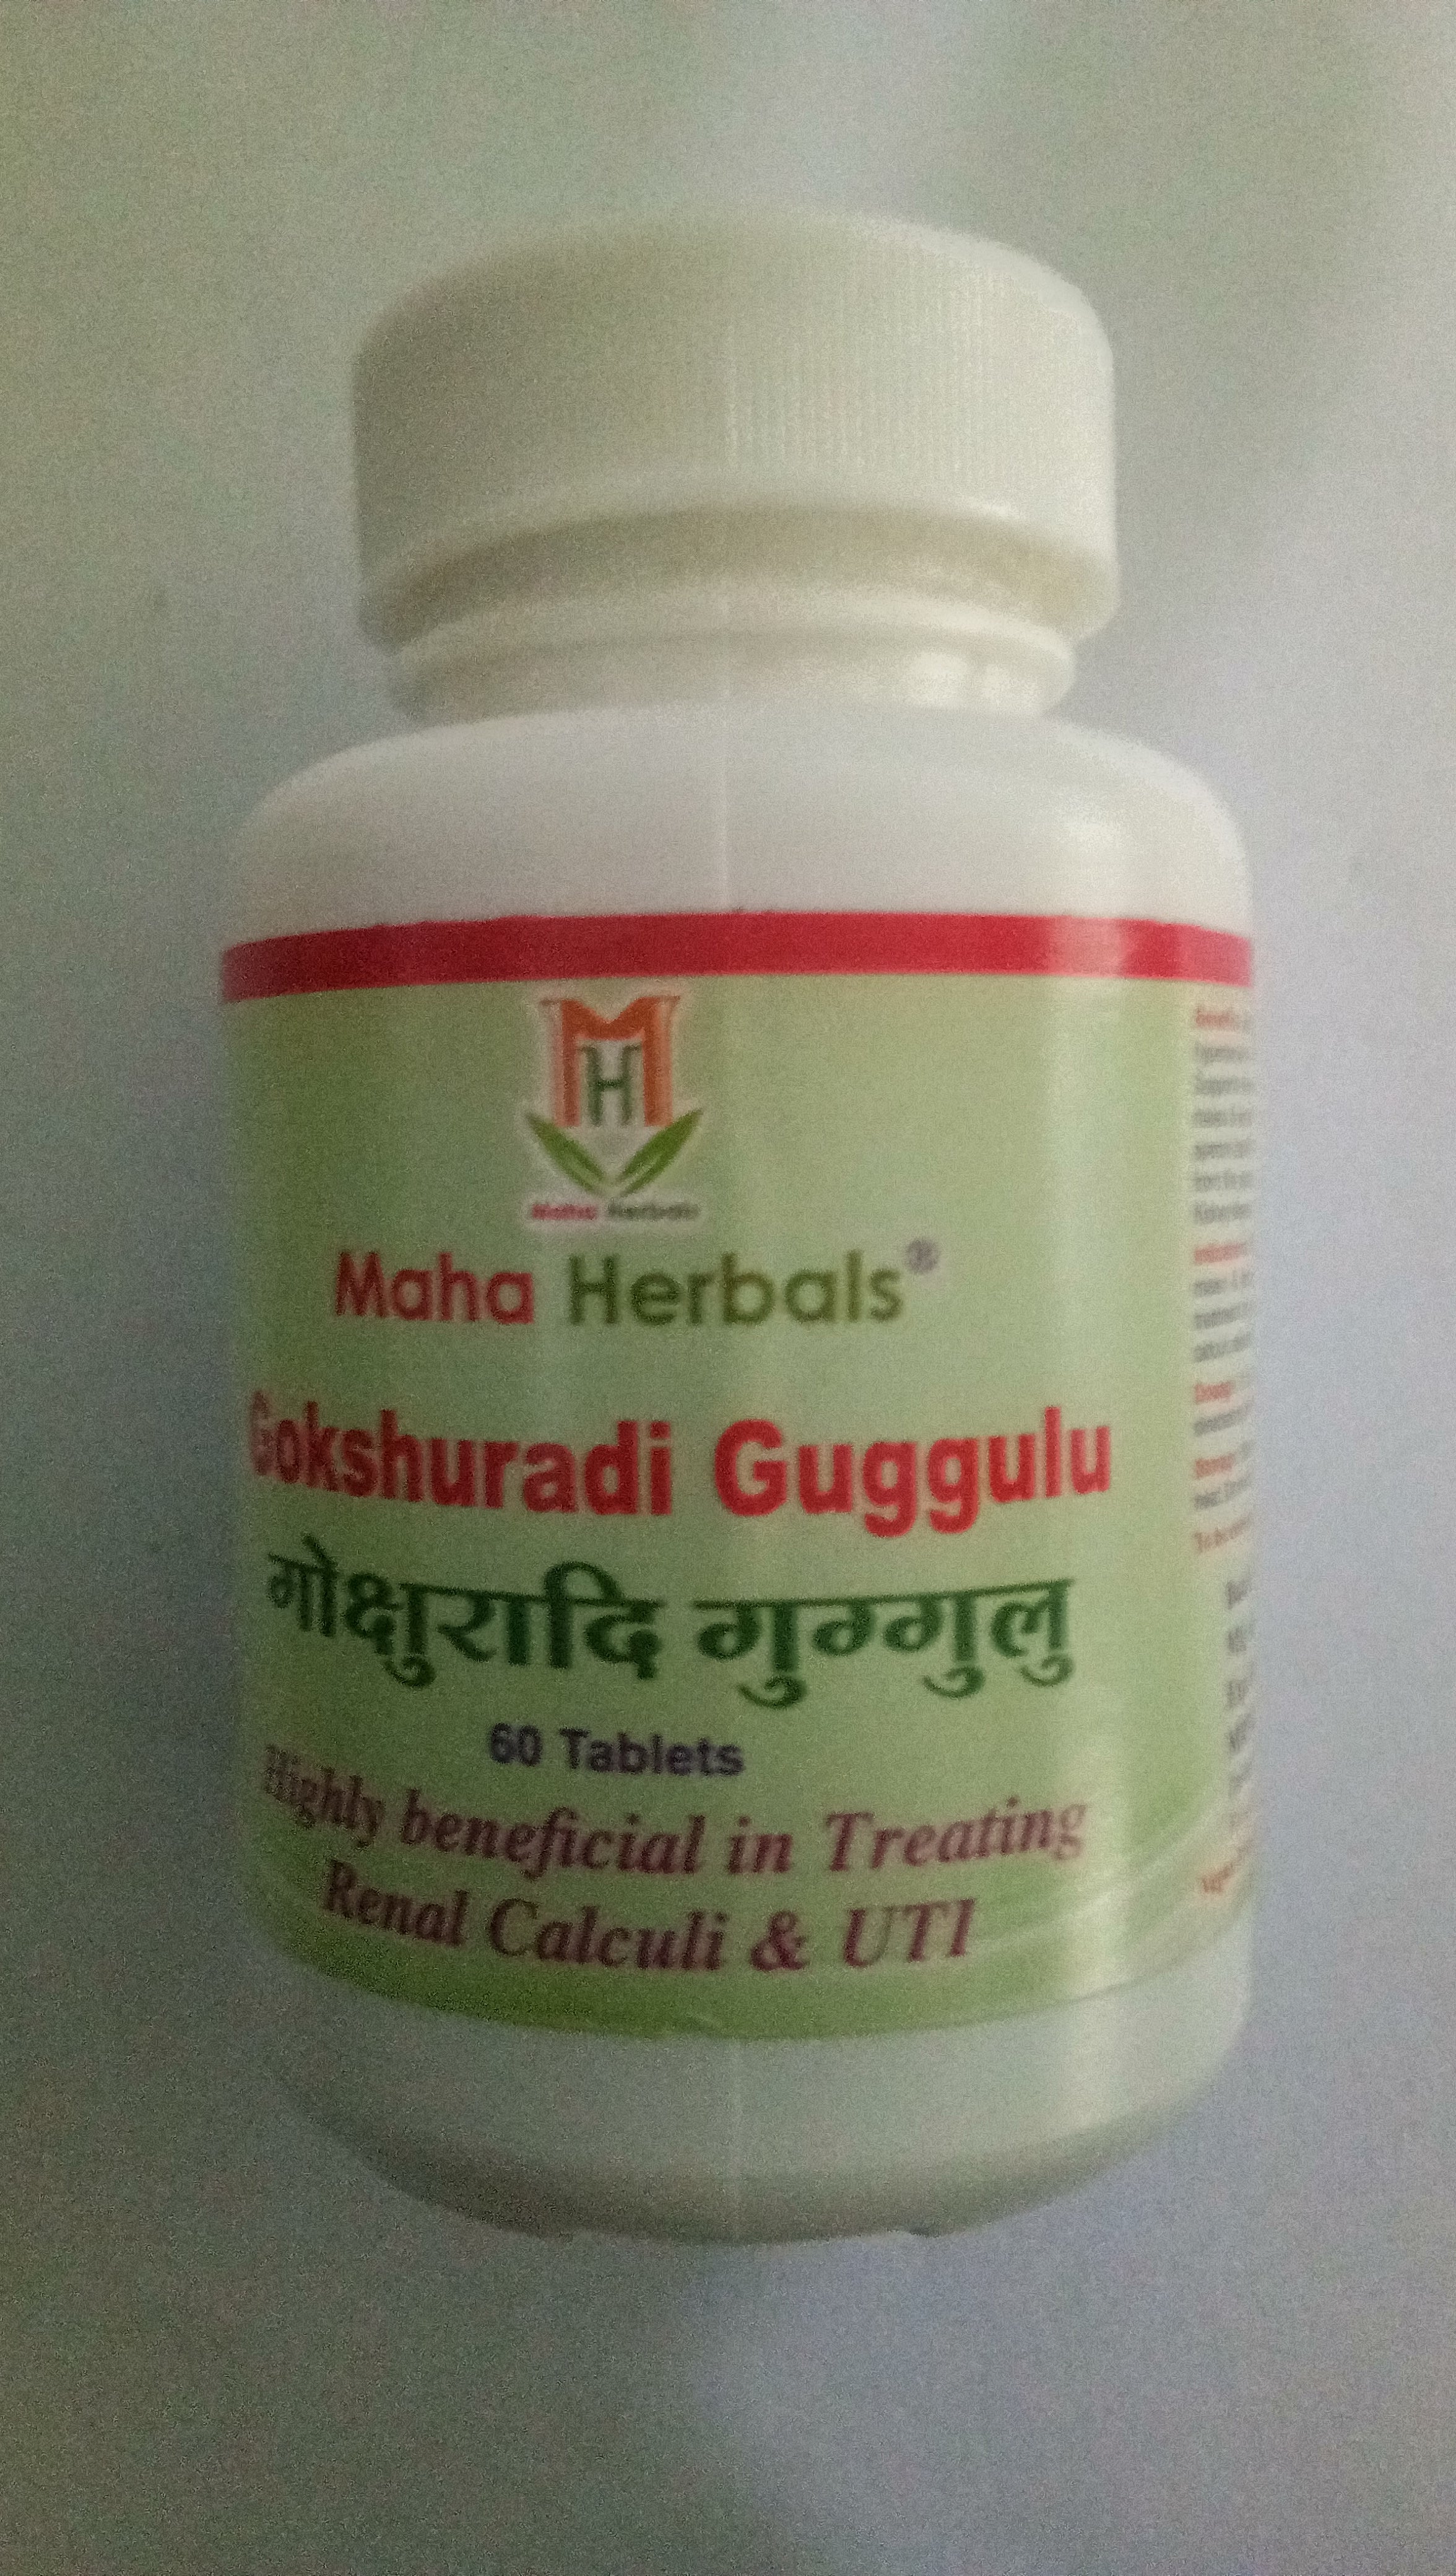 Maha Herbal Gokshuradi Guggulu - Gudhealthy